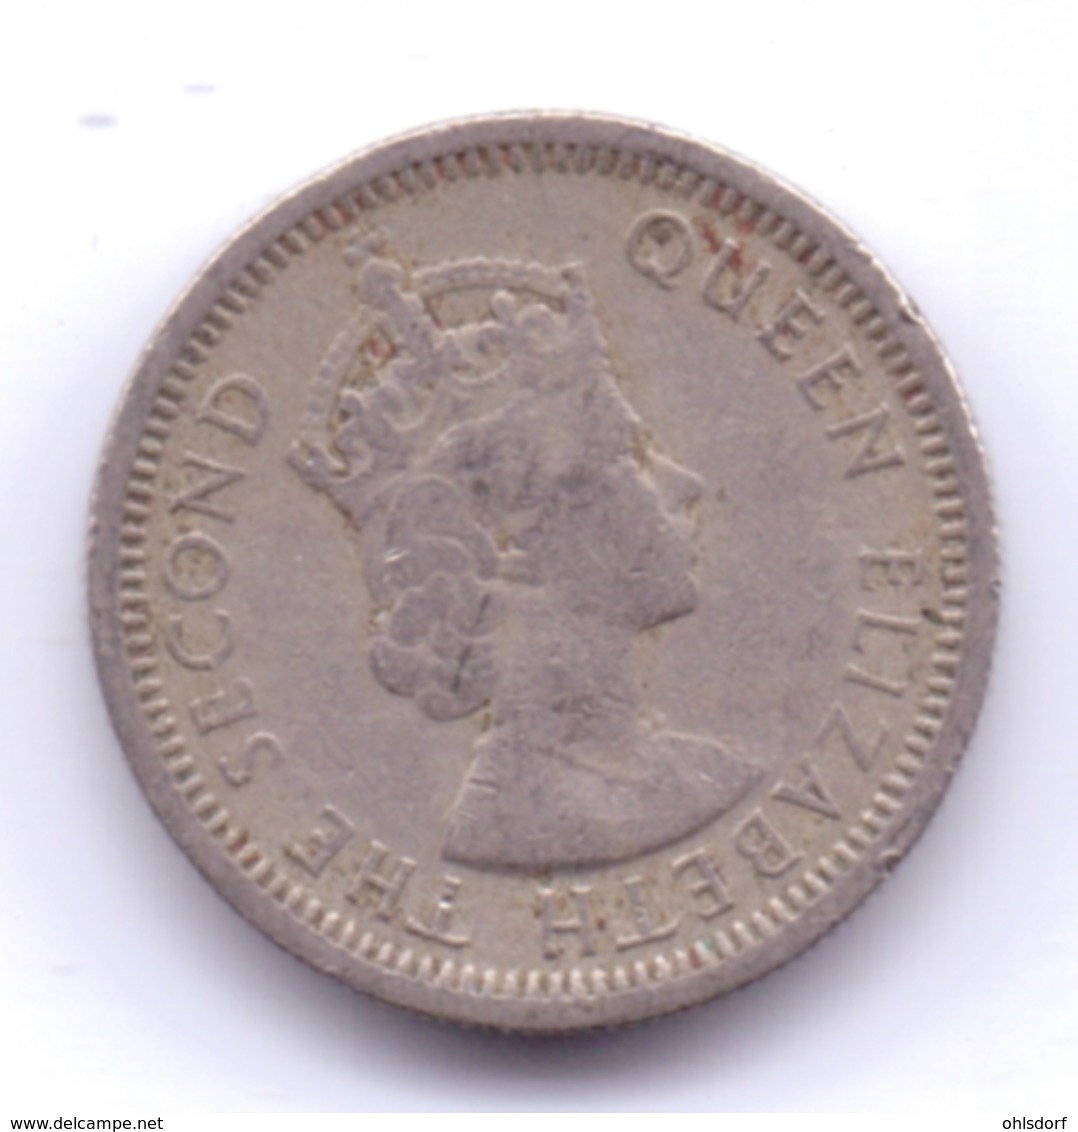 BRITISH CARIBBEAN TERRITORIES 1956: 10 Cents, KM 5 - Caribe Británica (Territorios Del)